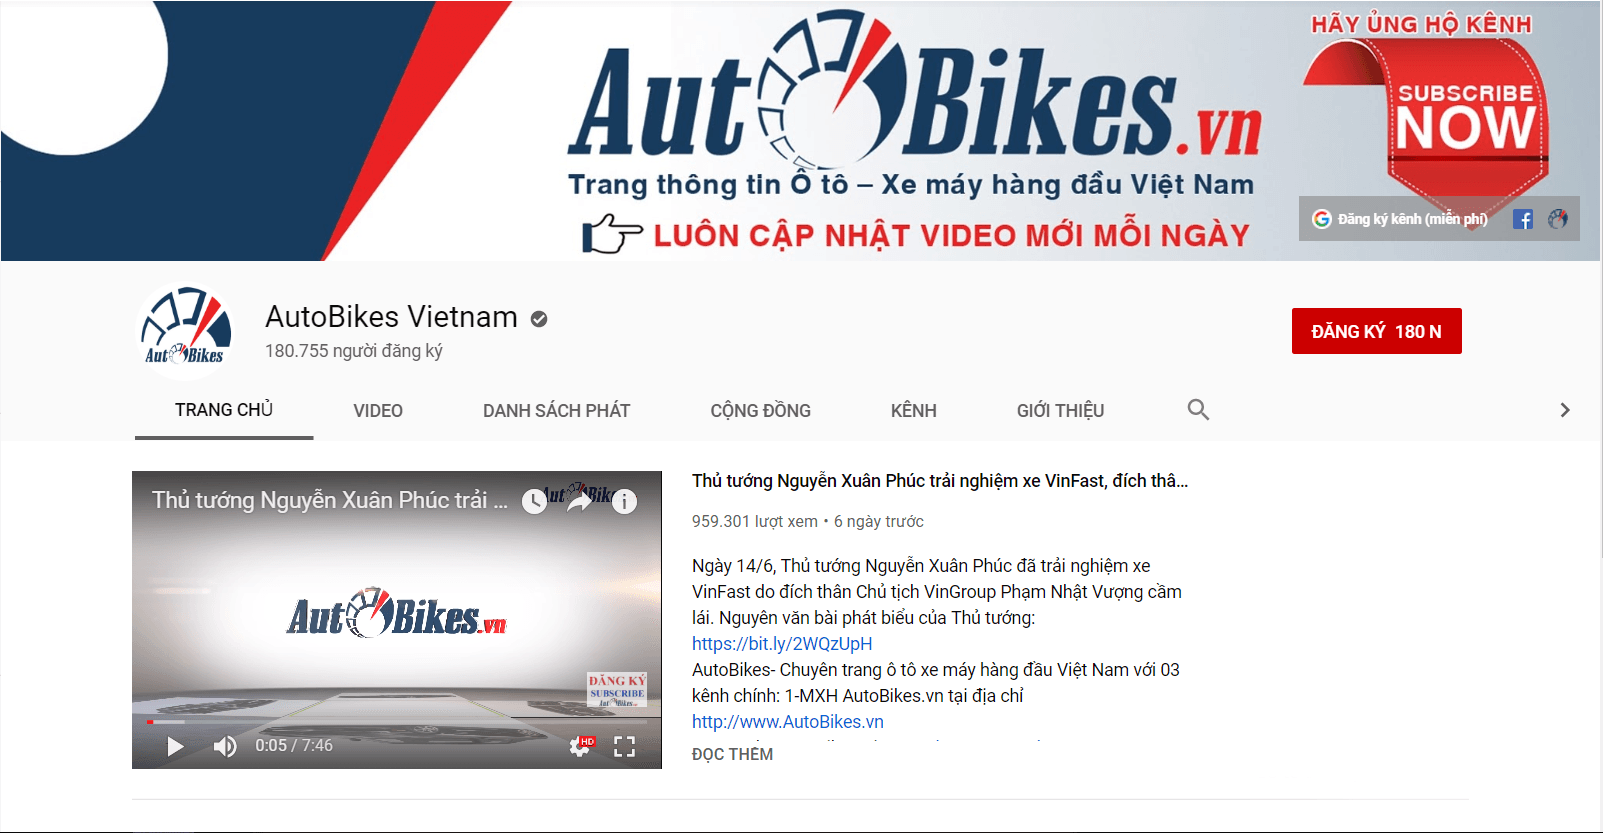 https://blog.7saturday.com/wp-content/uploads/2019/06/autobikes.png